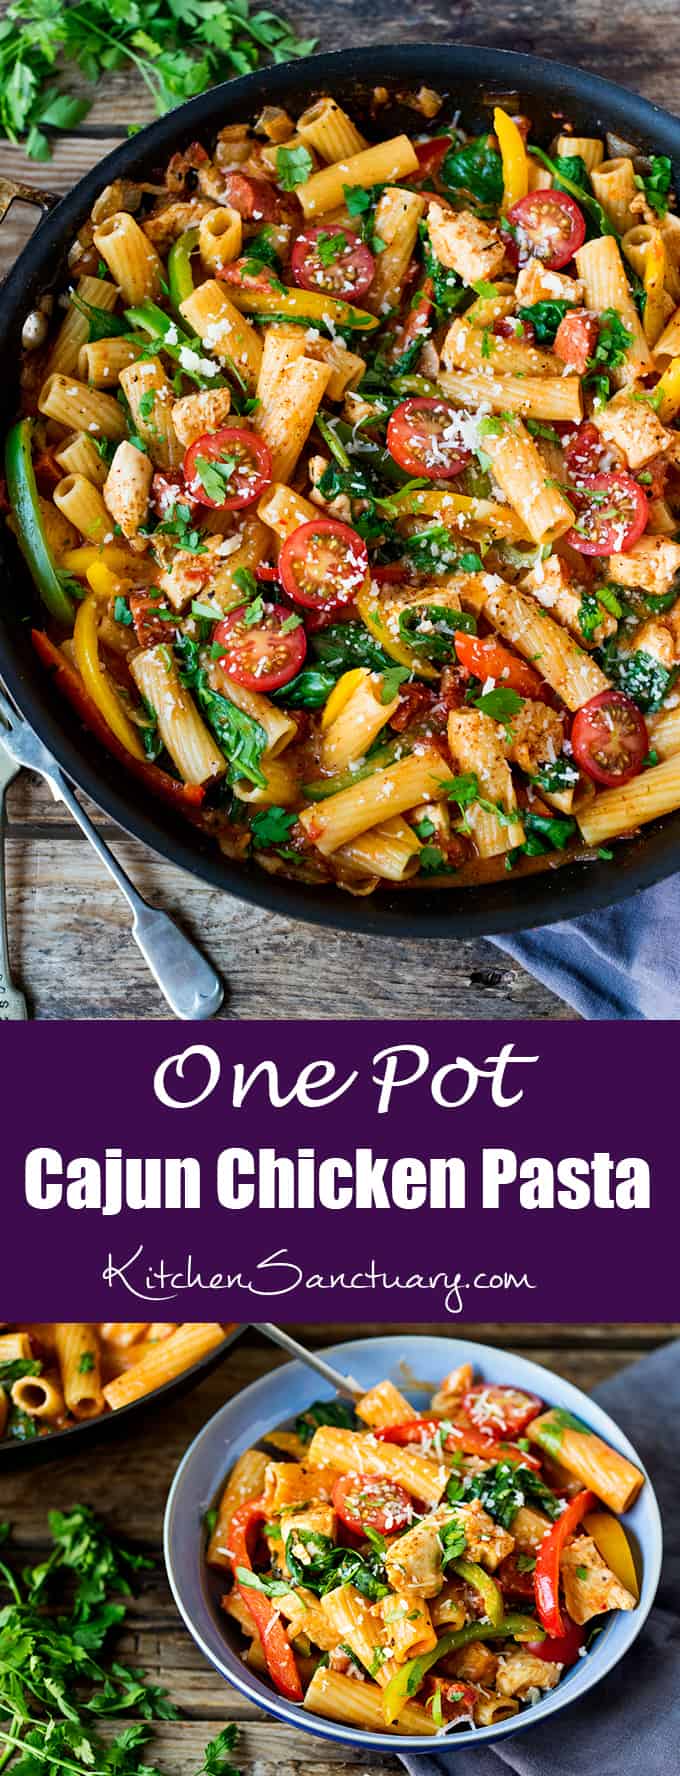 Cajun Chicken Pasta One Pot - Nicky's Kitchen Sanctuary